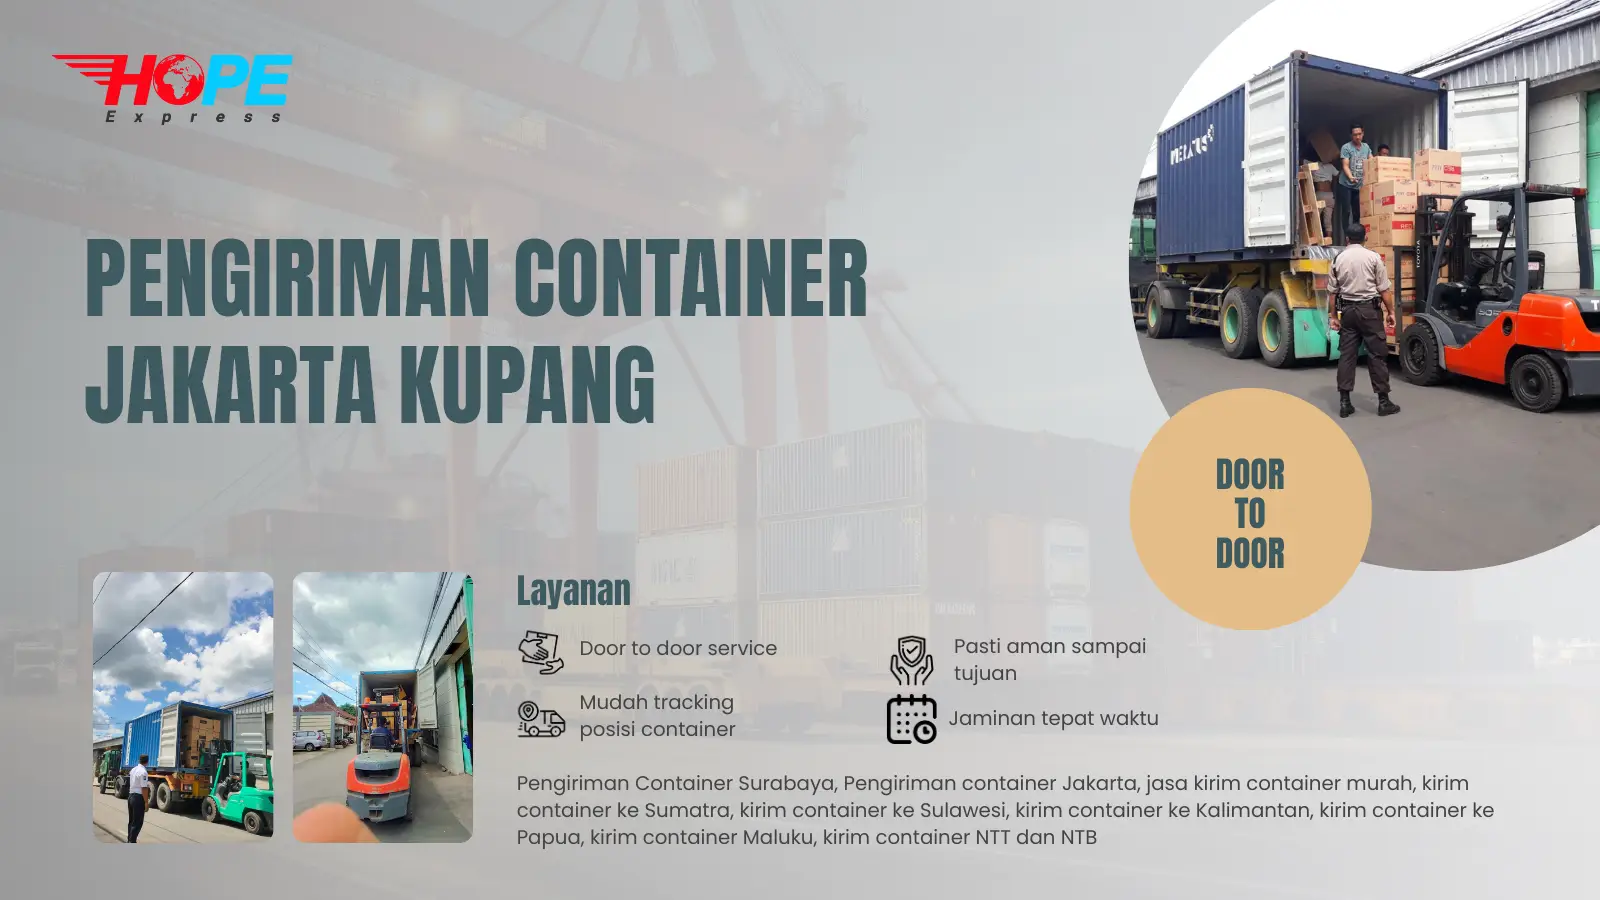 Pengiriman Container Jakarta Kupang